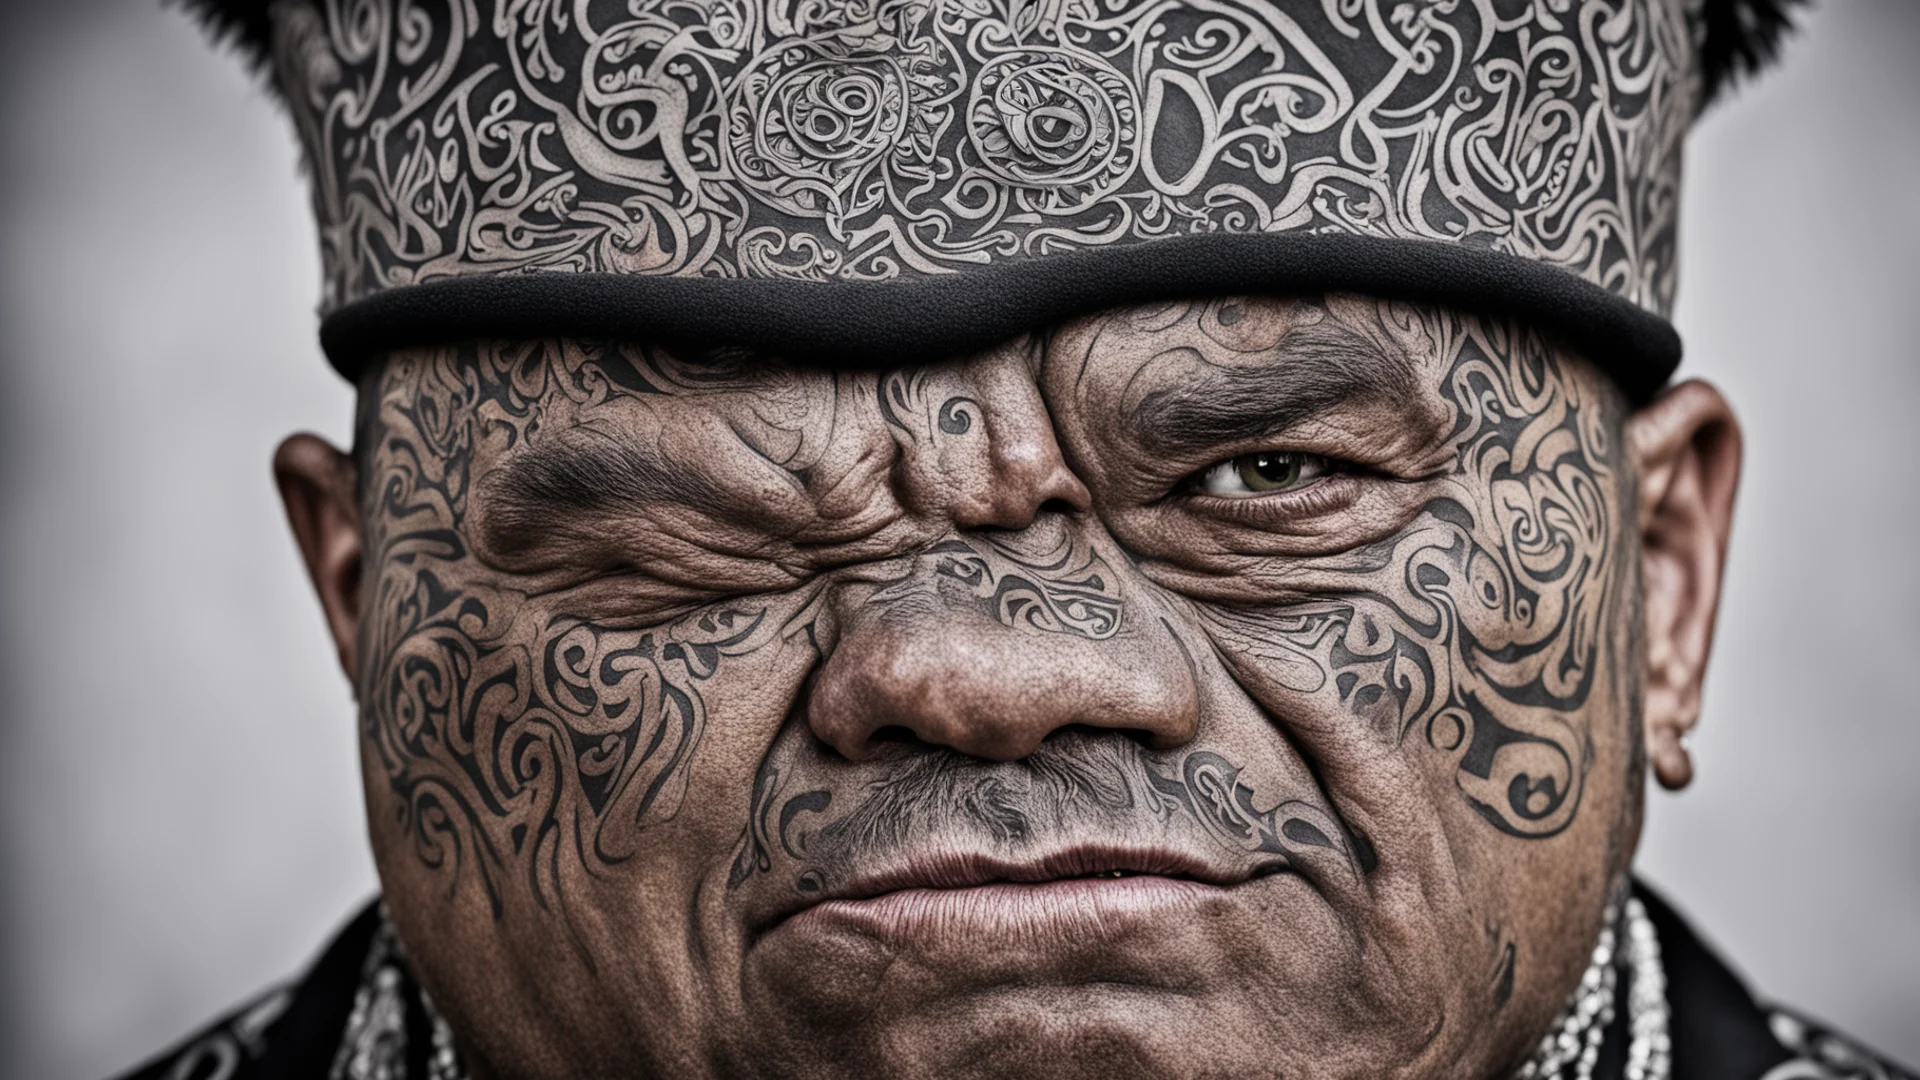 maori cheif moko facial tatoos menacing close up face top hat wide